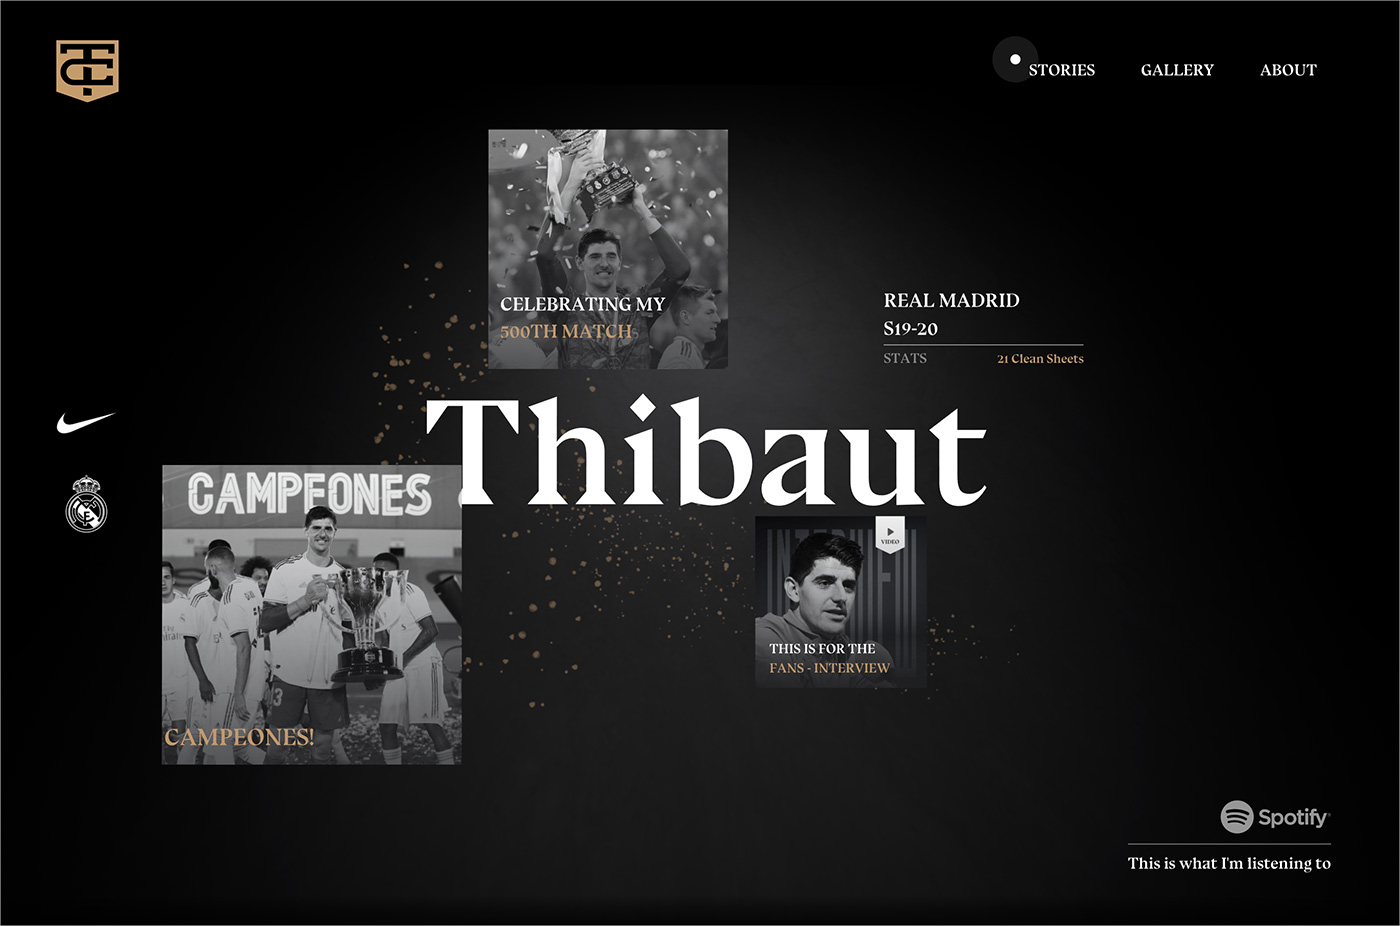 Thibaut Courtoisウェブサイトの画面キャプチャ画像